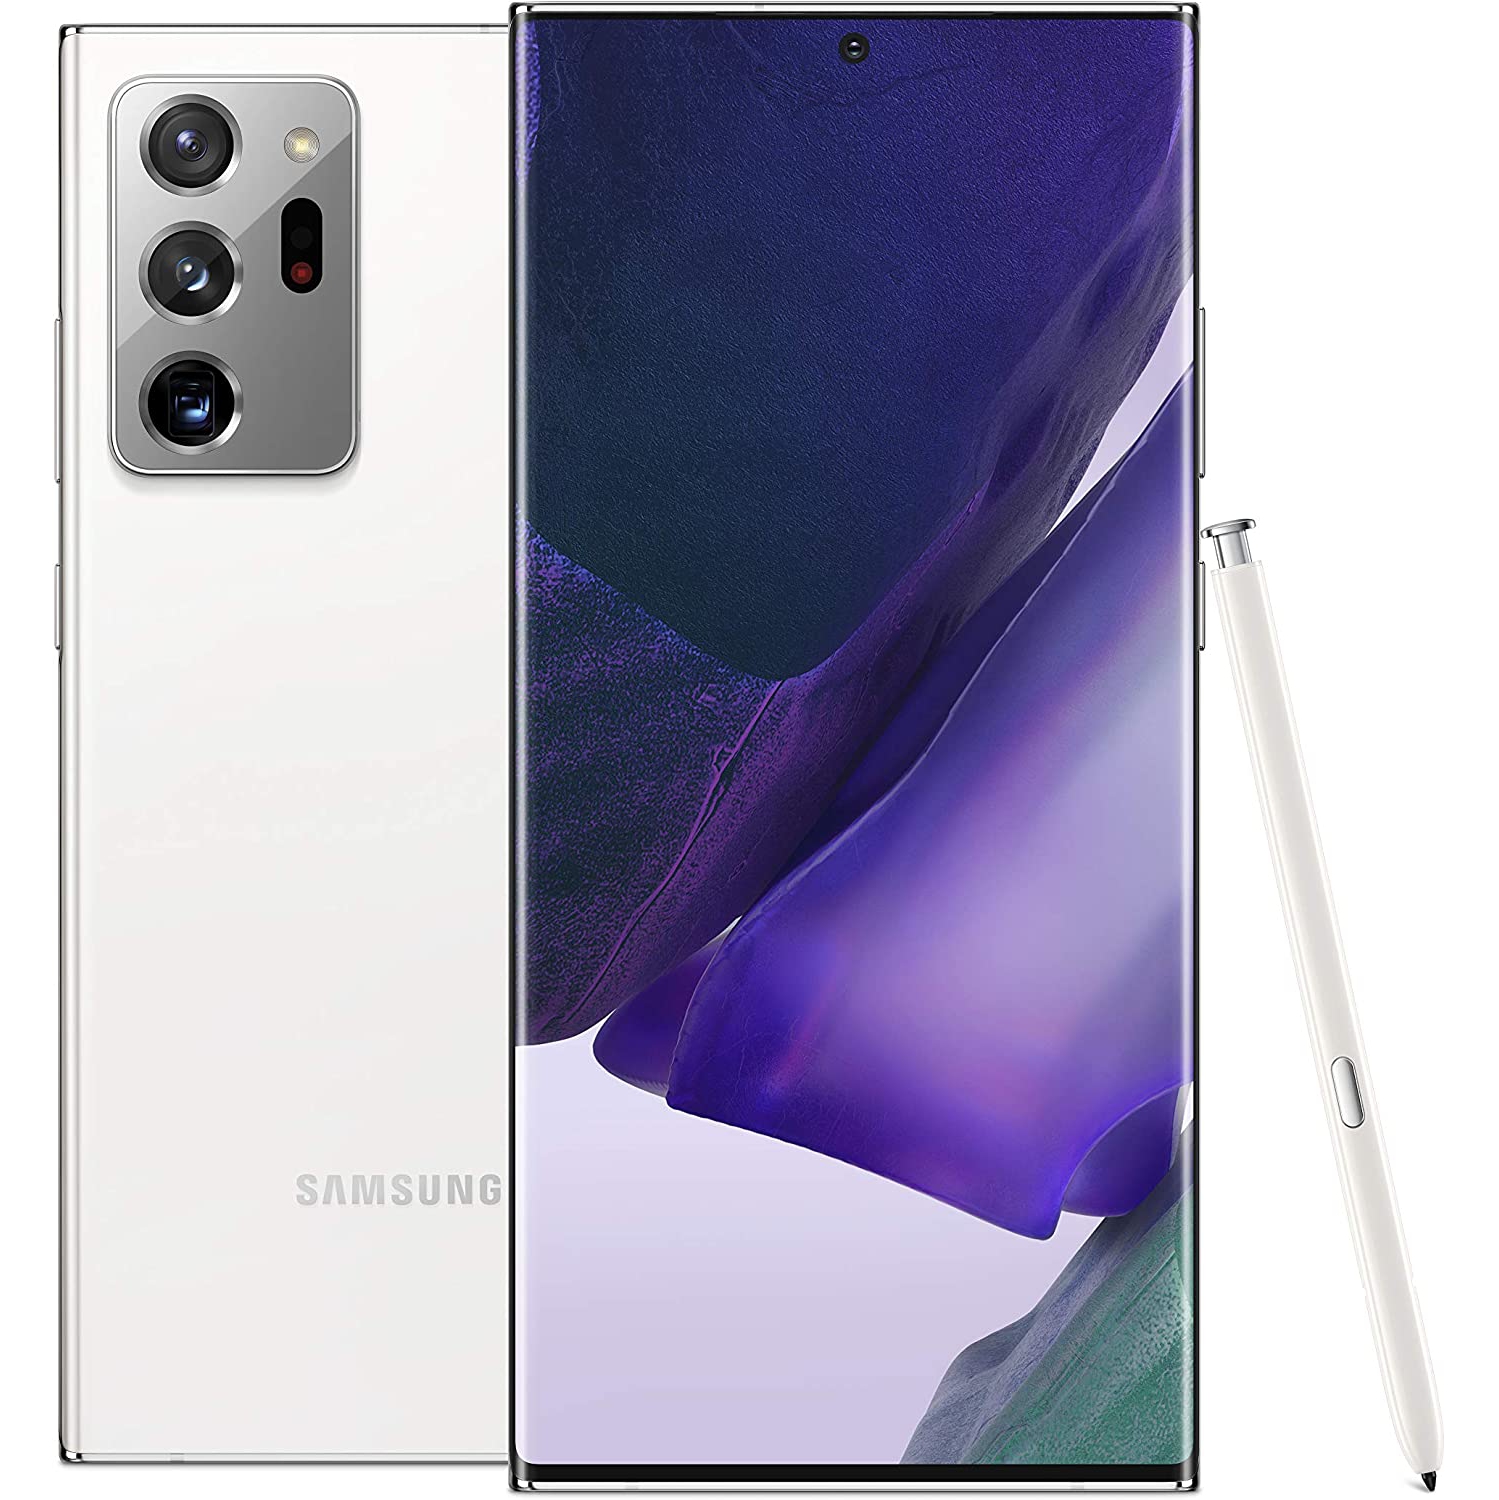 Samsung Galaxy Note 20 Ultra 256/8GB RAM (SM-N985F/DS) International Model - GSM Unlocked Smartphone - Mystic White - Brand New